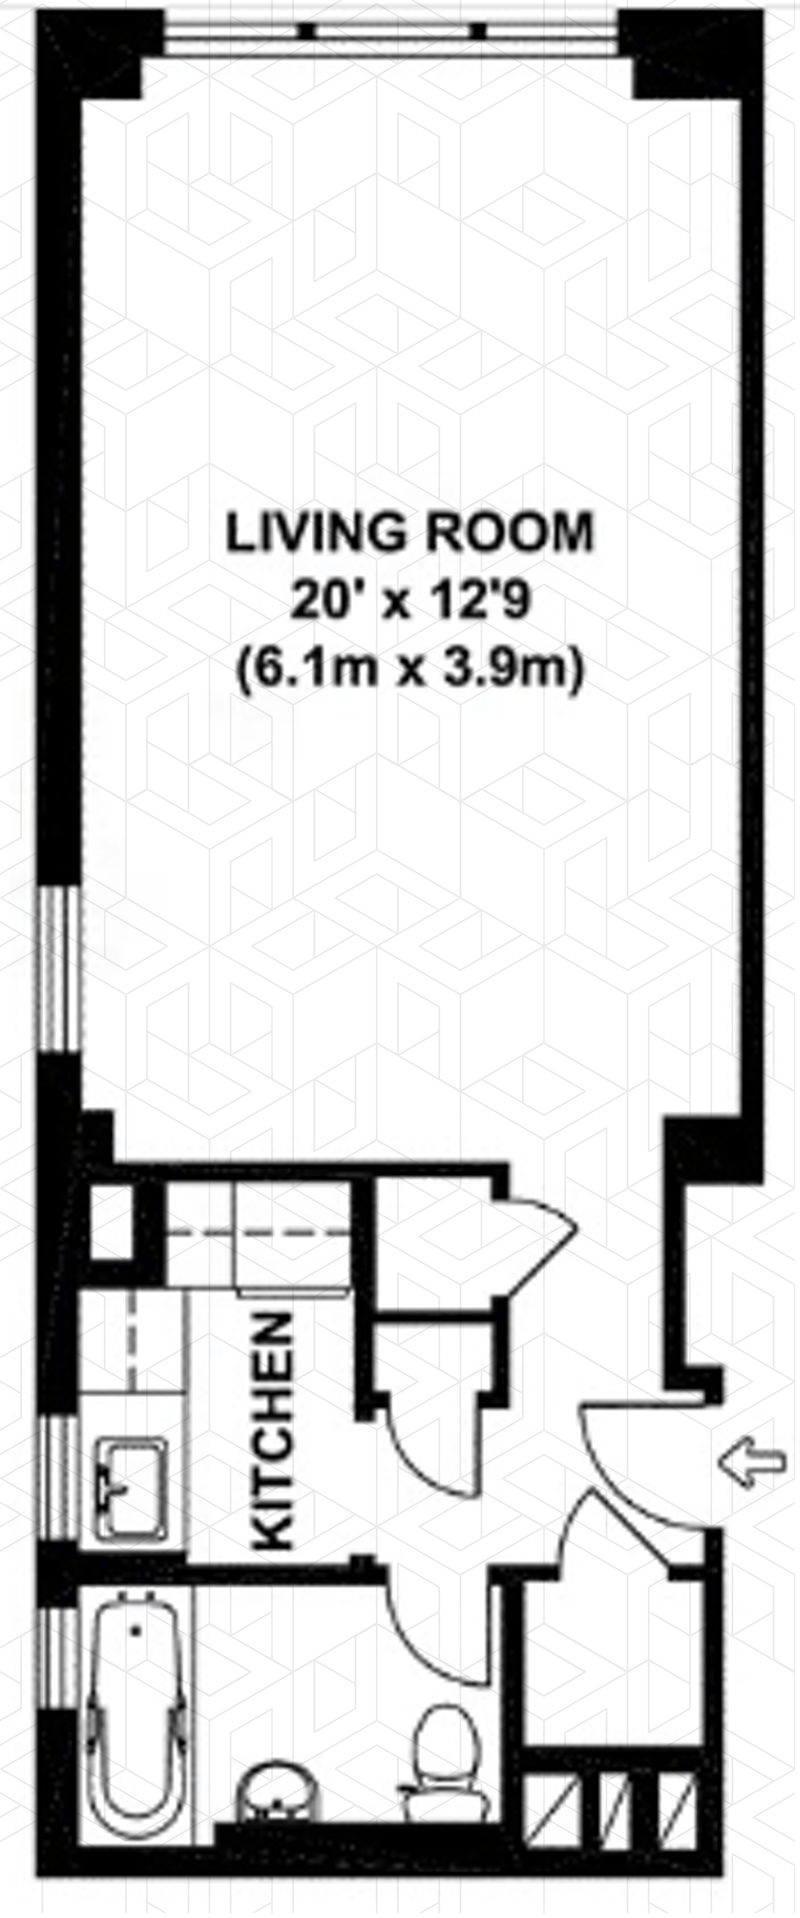 Floorplan for 321 East 45th Street